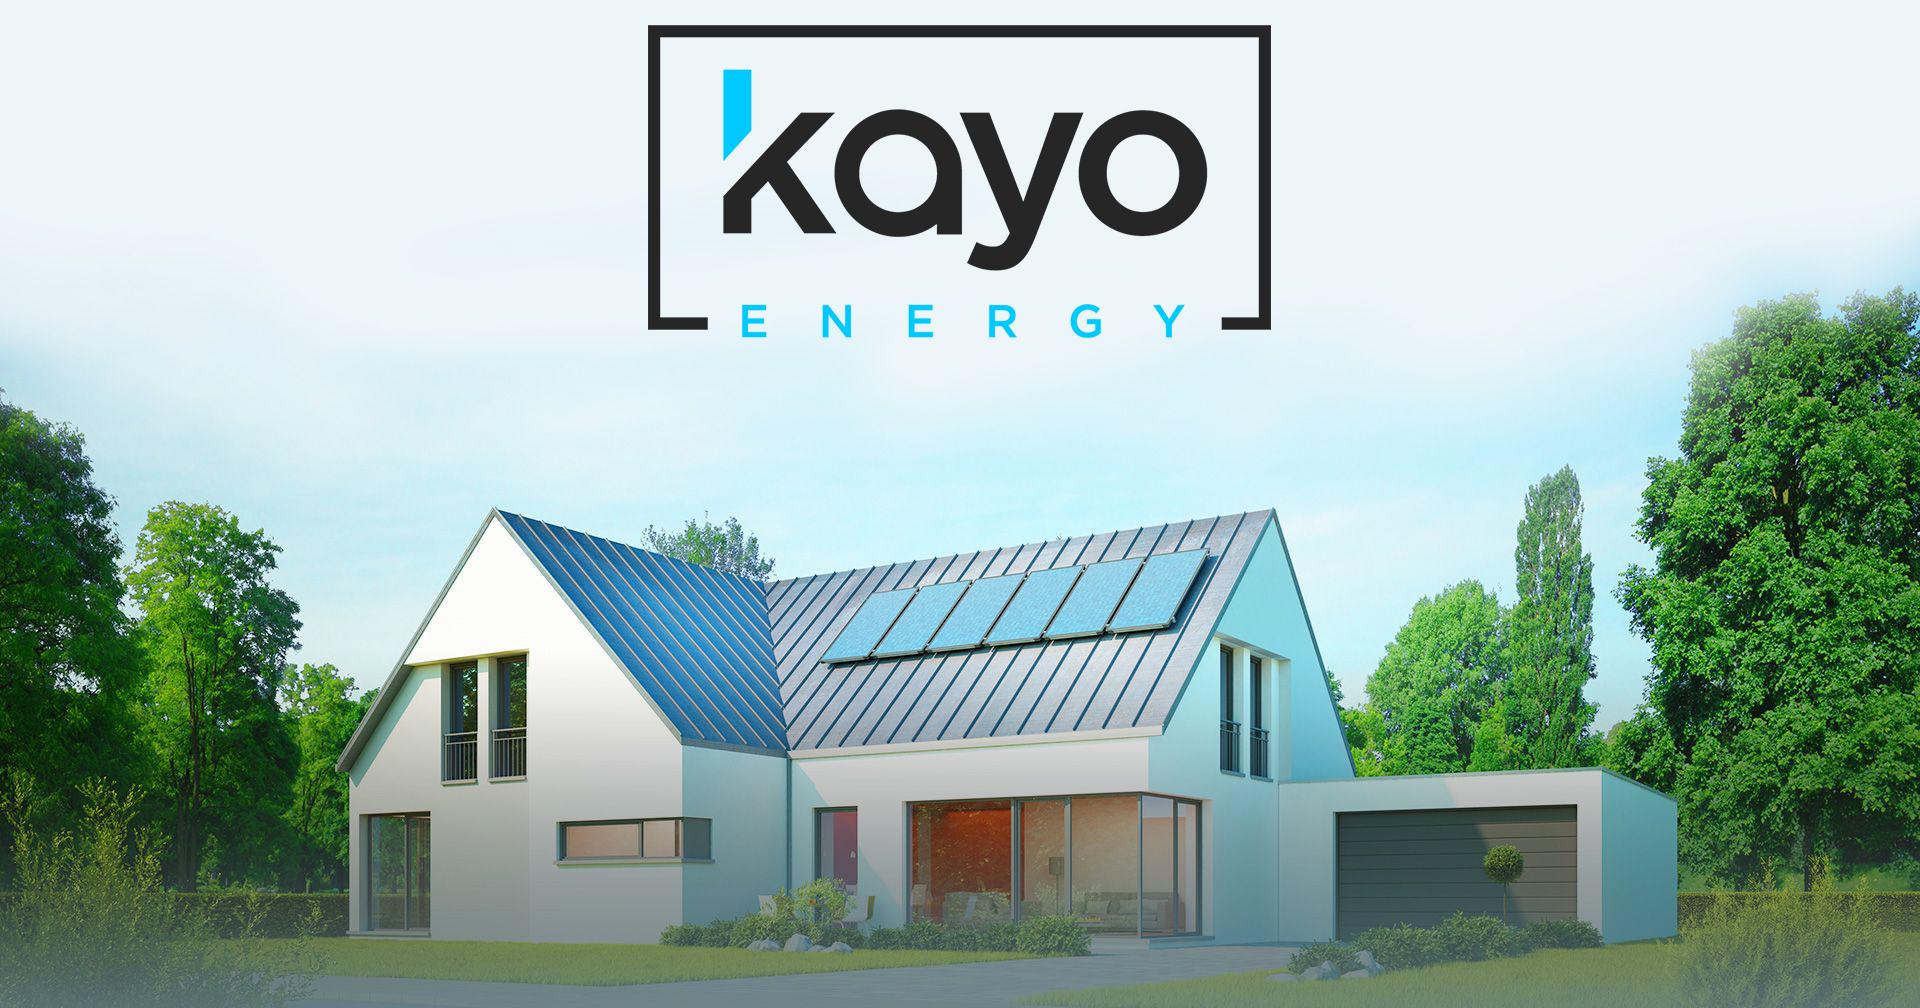 Product Dallas, Texas | Kayo Energy image